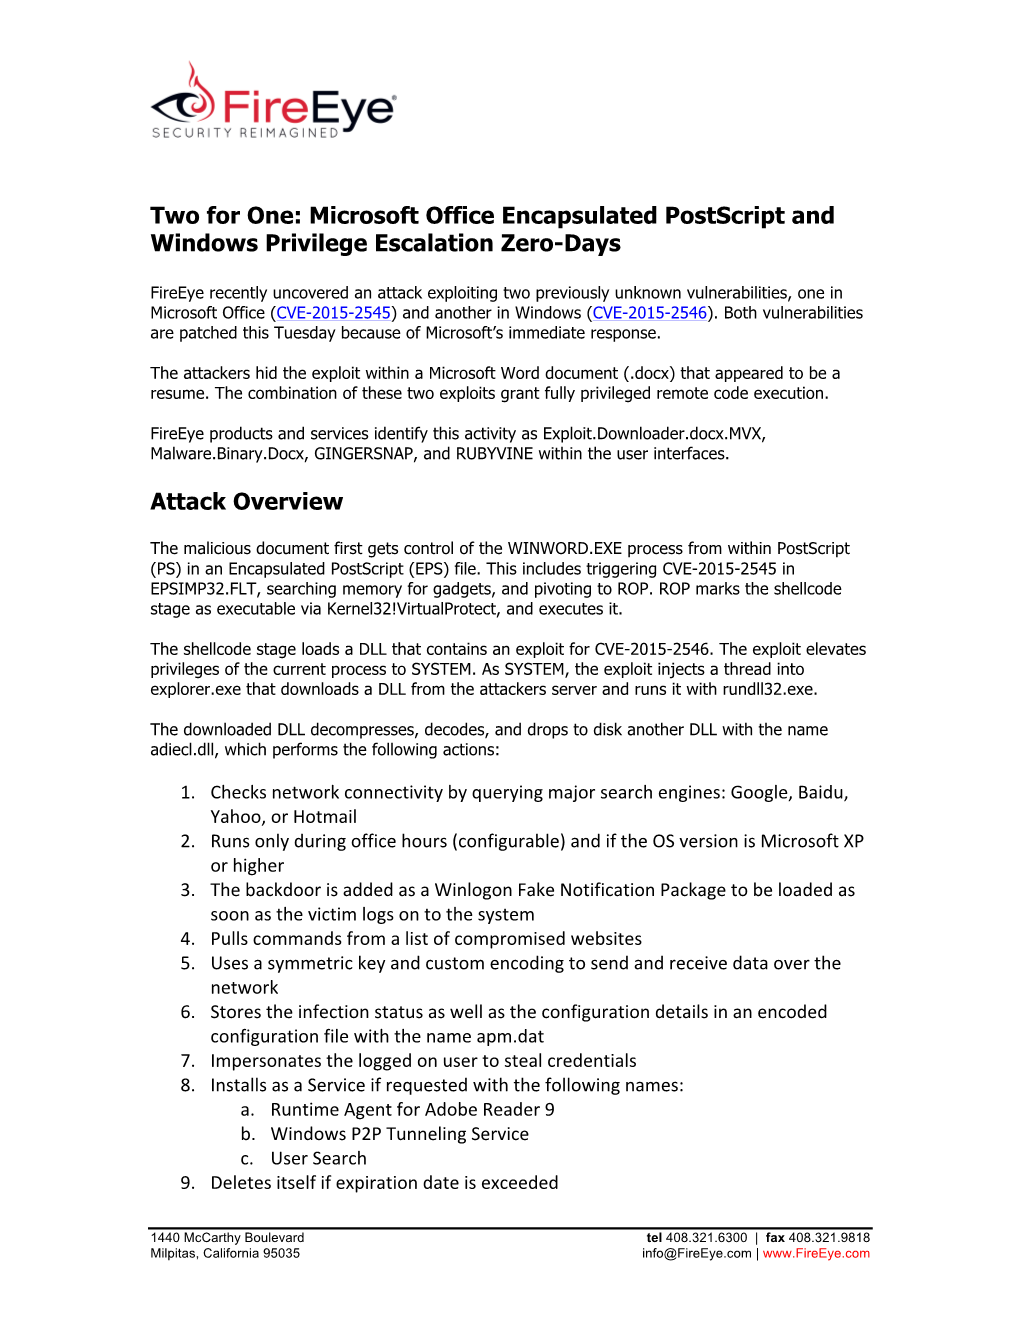 Microsoft Office Encapsulated Postscript and Windows Privilege Escalation Zero-Days